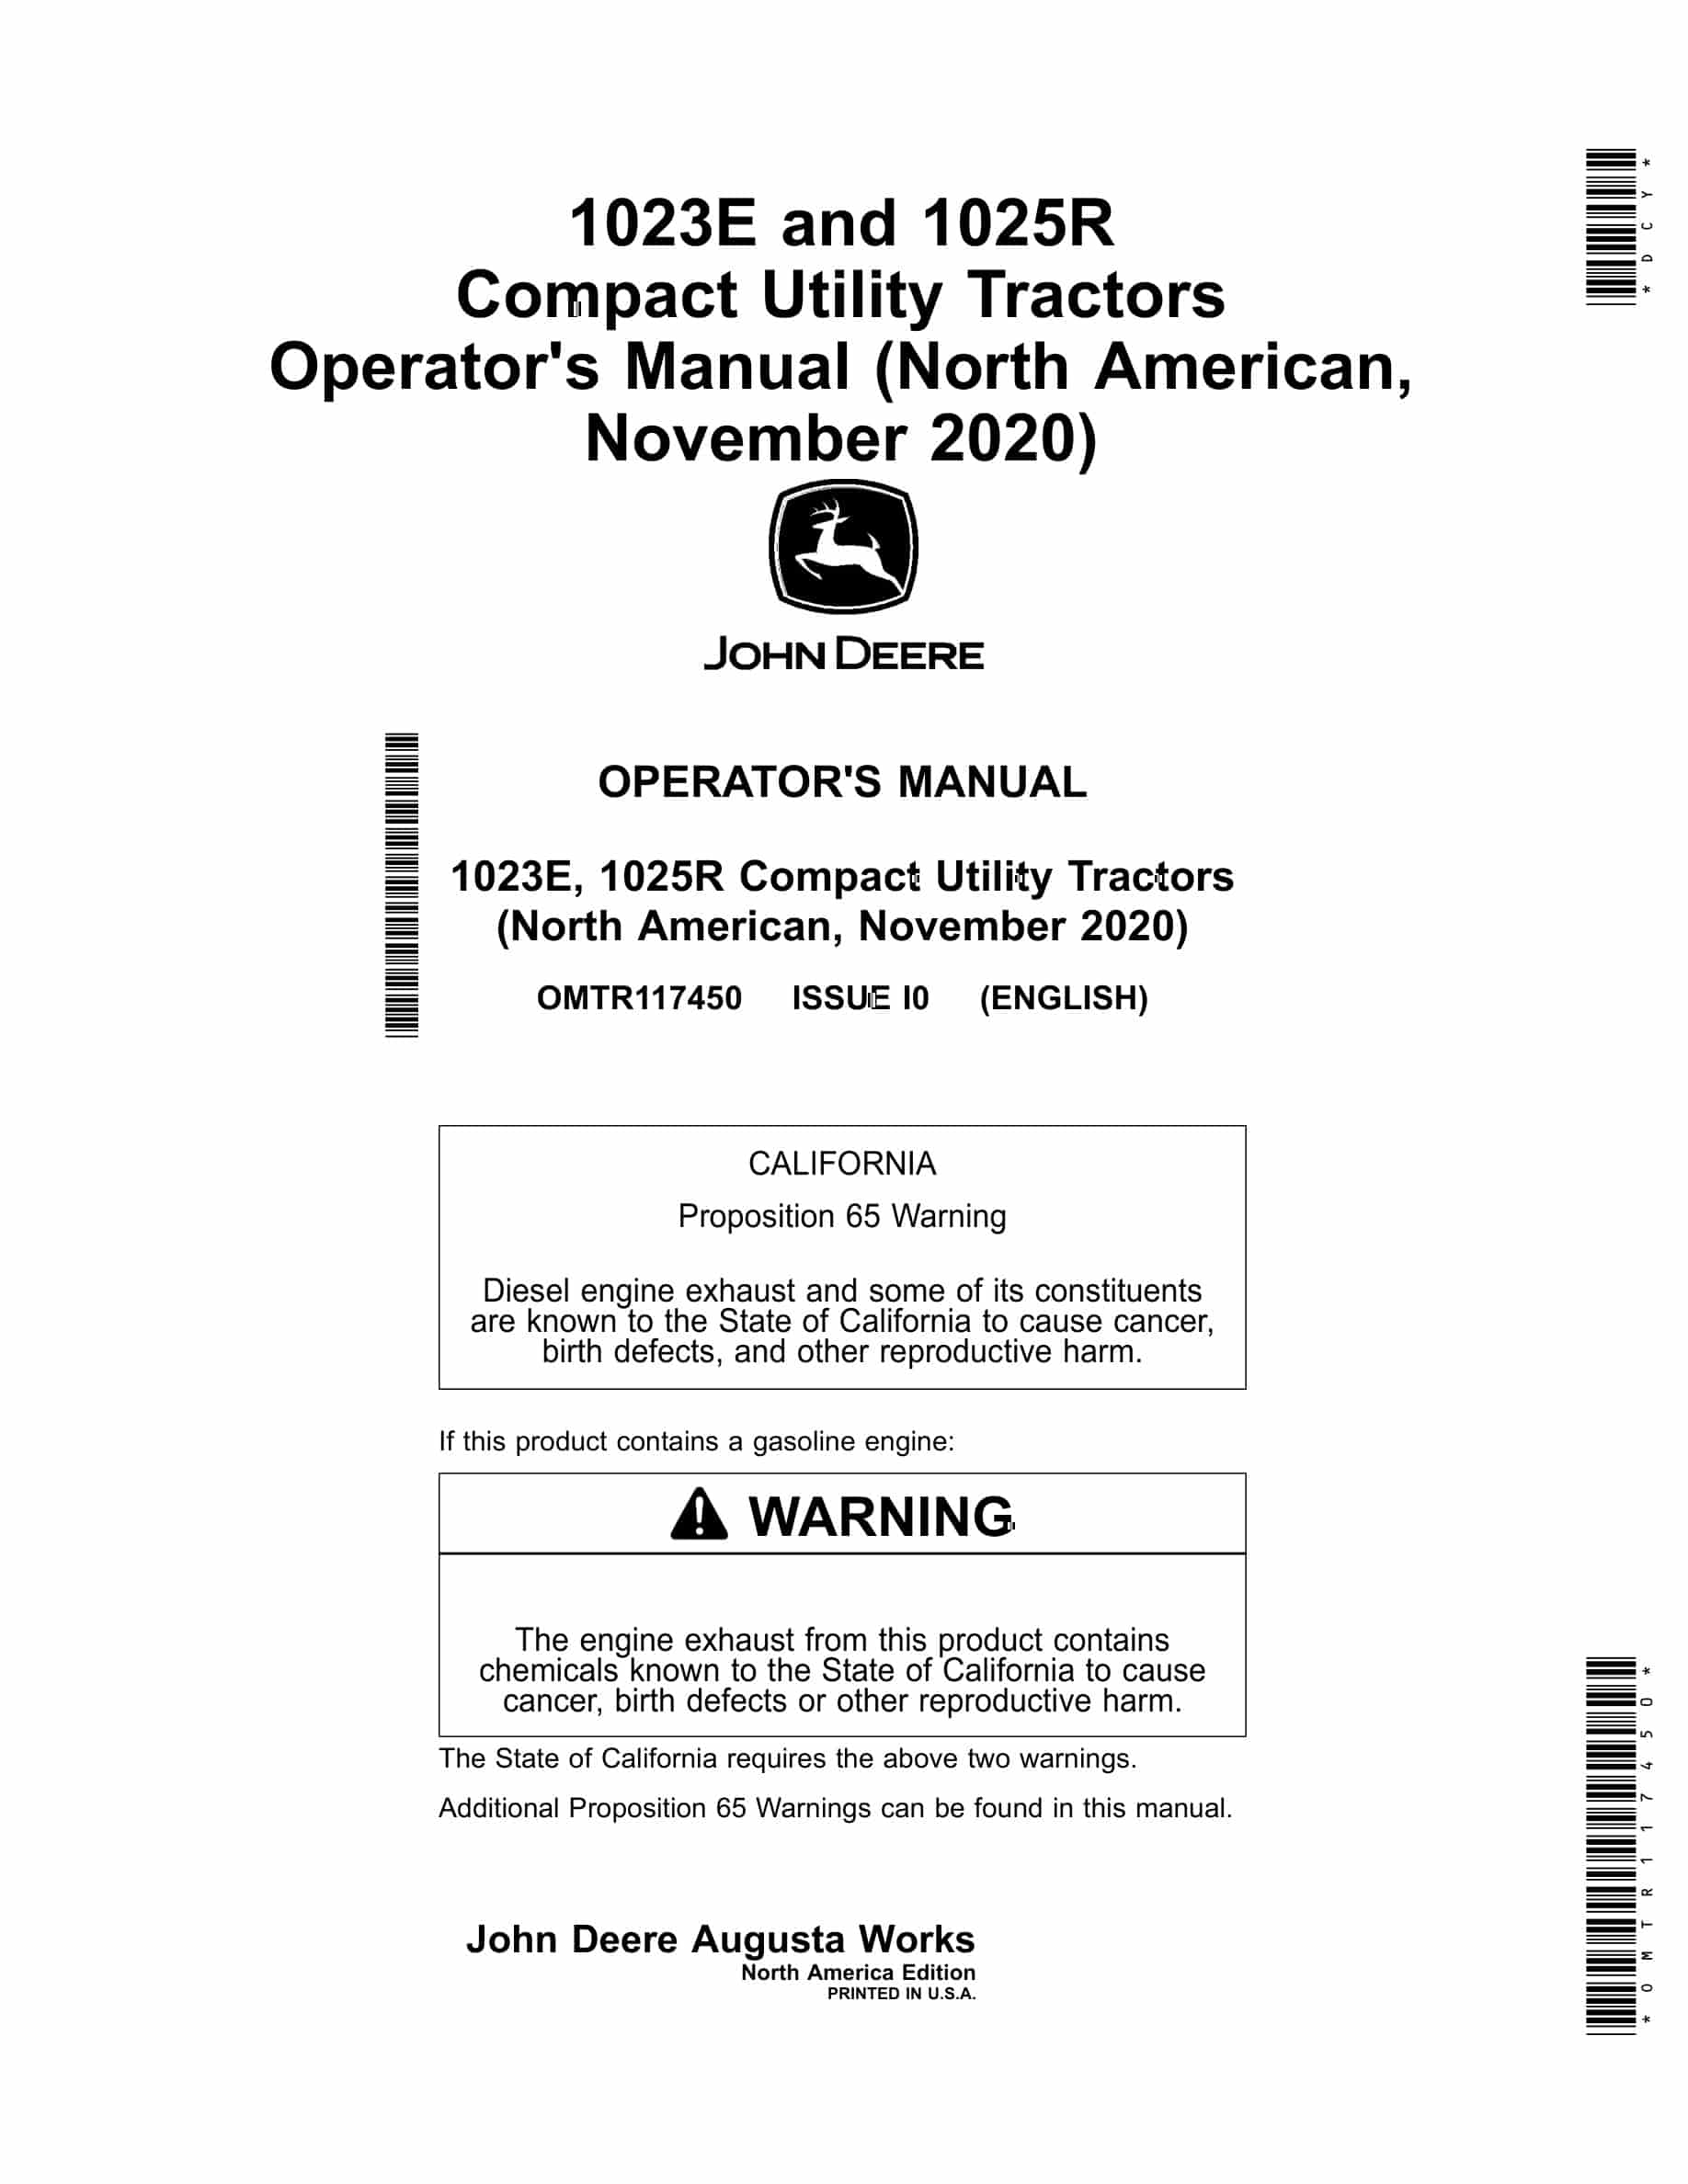 John Deere 1023E and 1025R Tractor Operator Manual OMTR117450-1